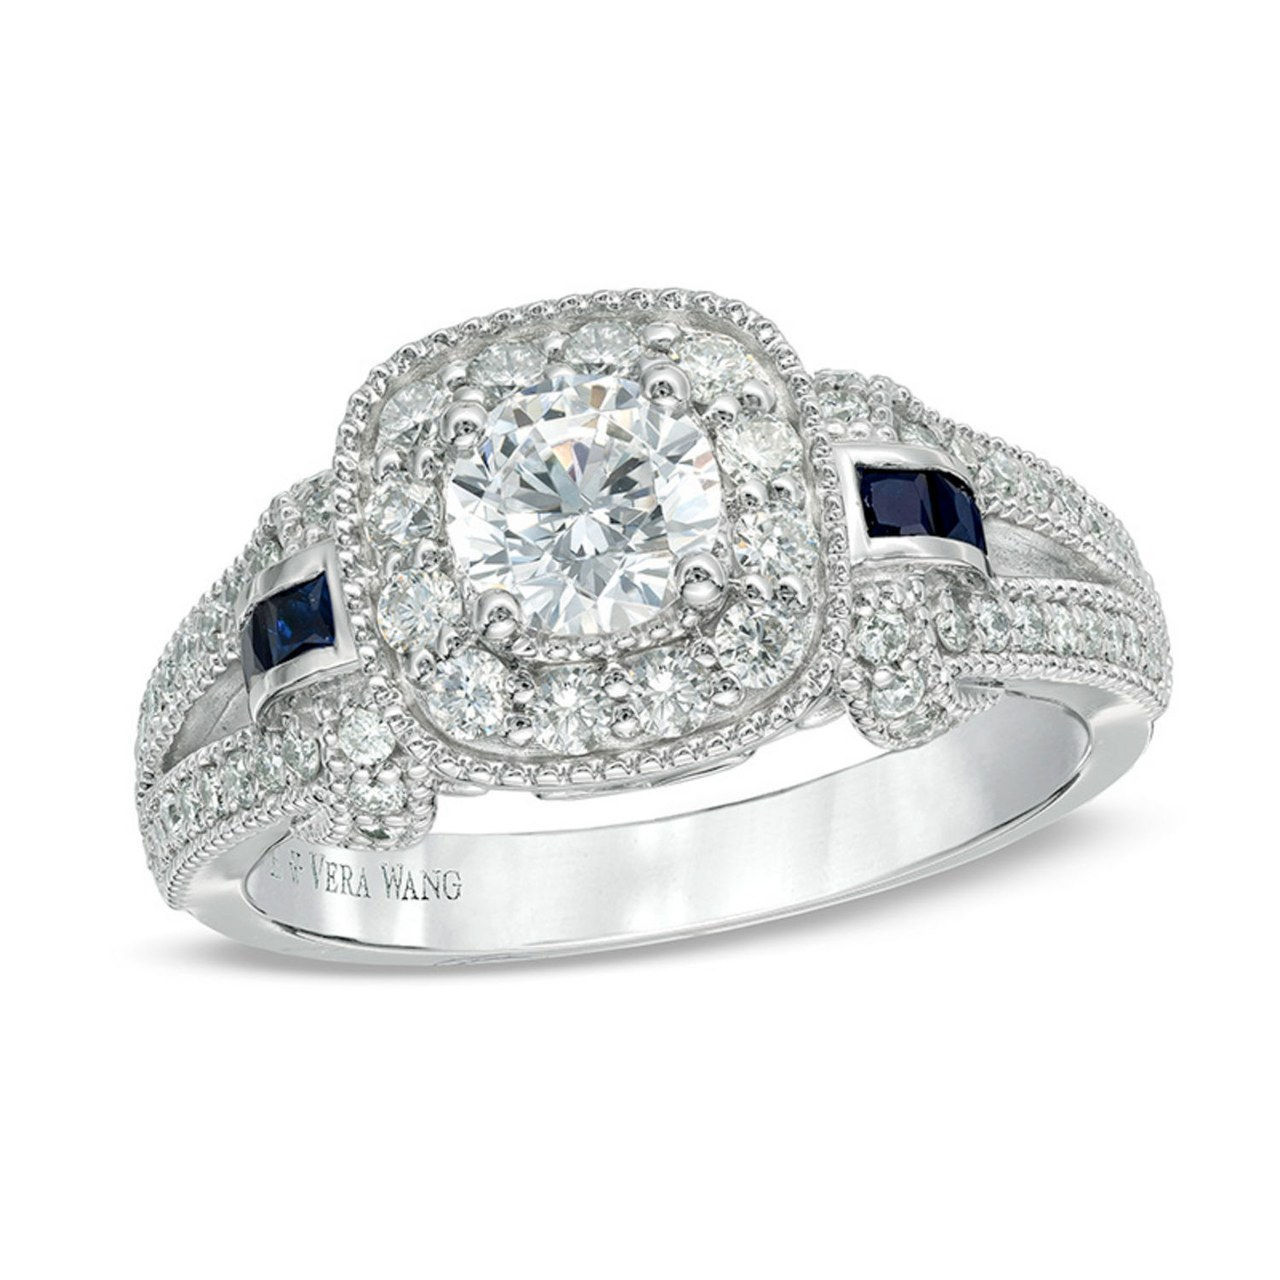 2c sapphire engagement rings 1026 courtesy vera wang love